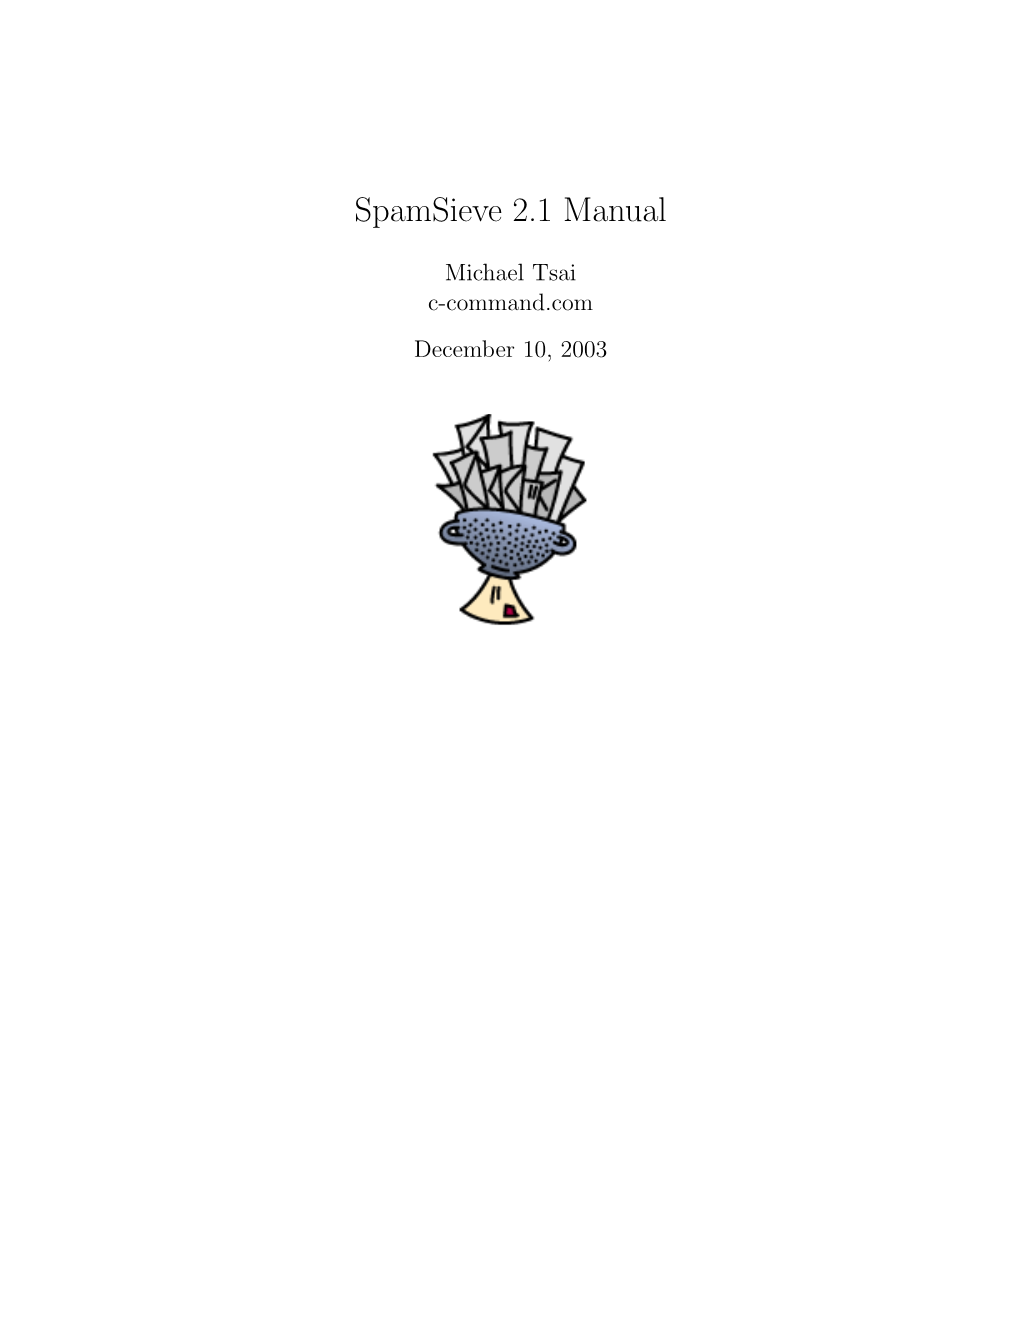 Spamsieve 2.1 Manual